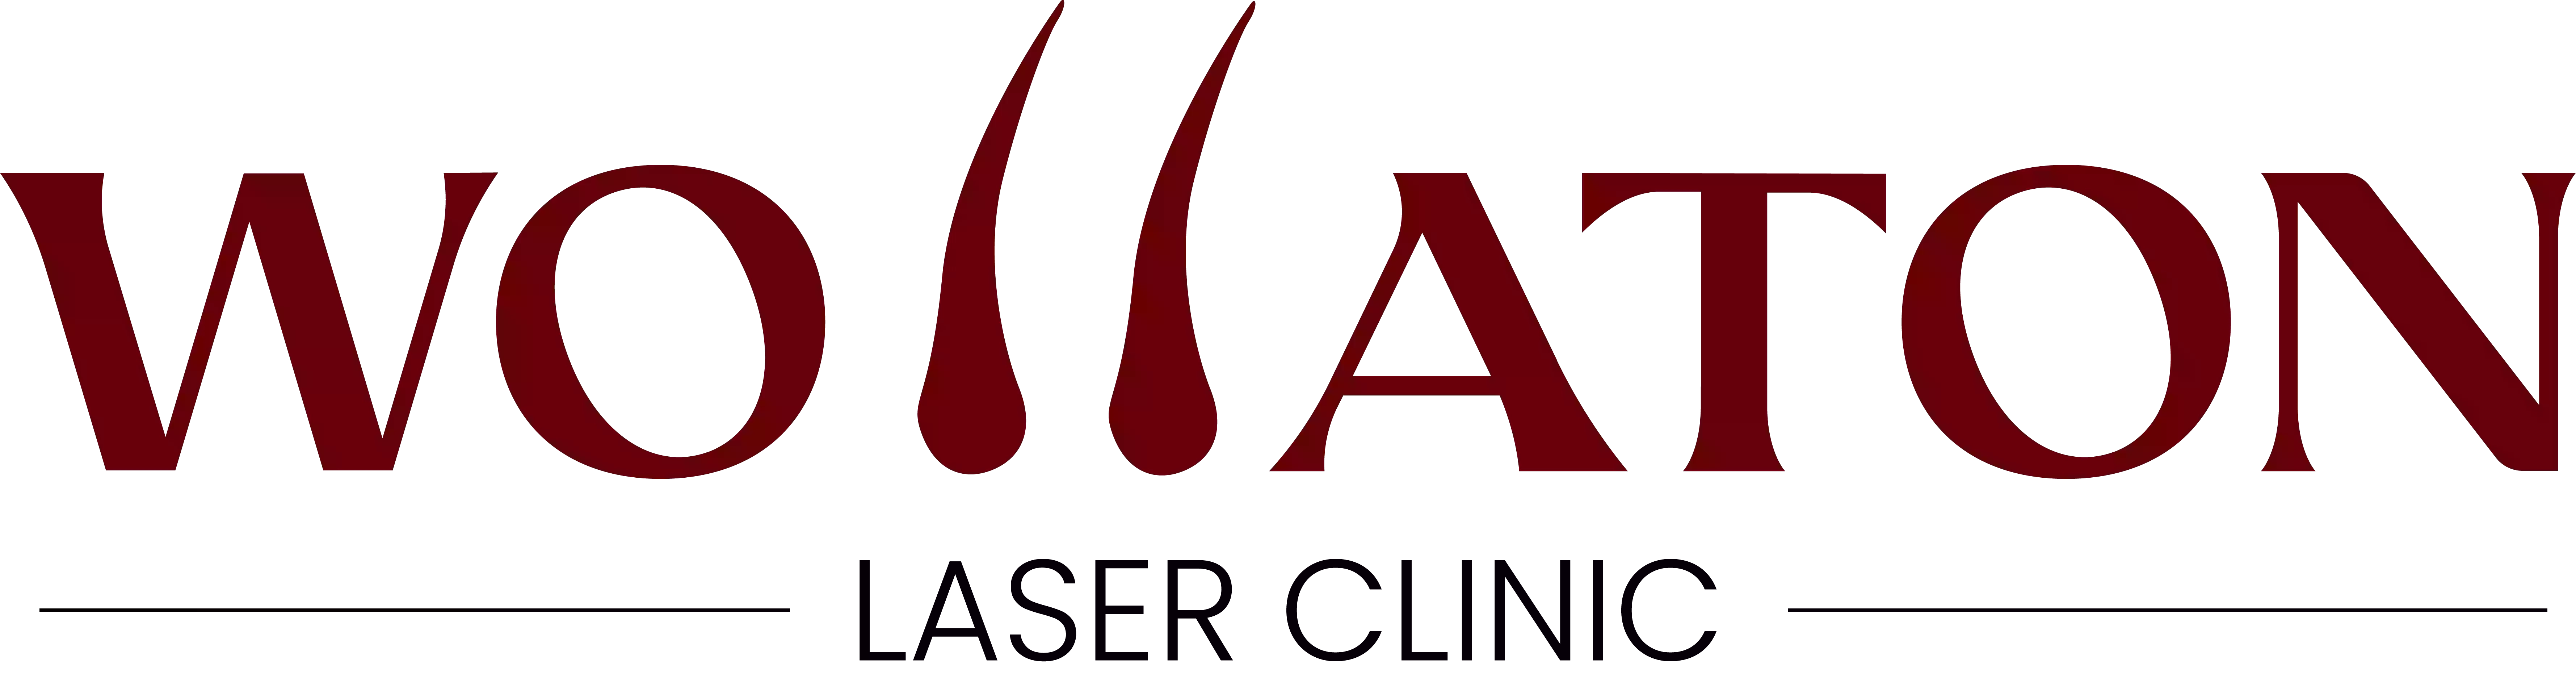 Wollaton Laser Clinic